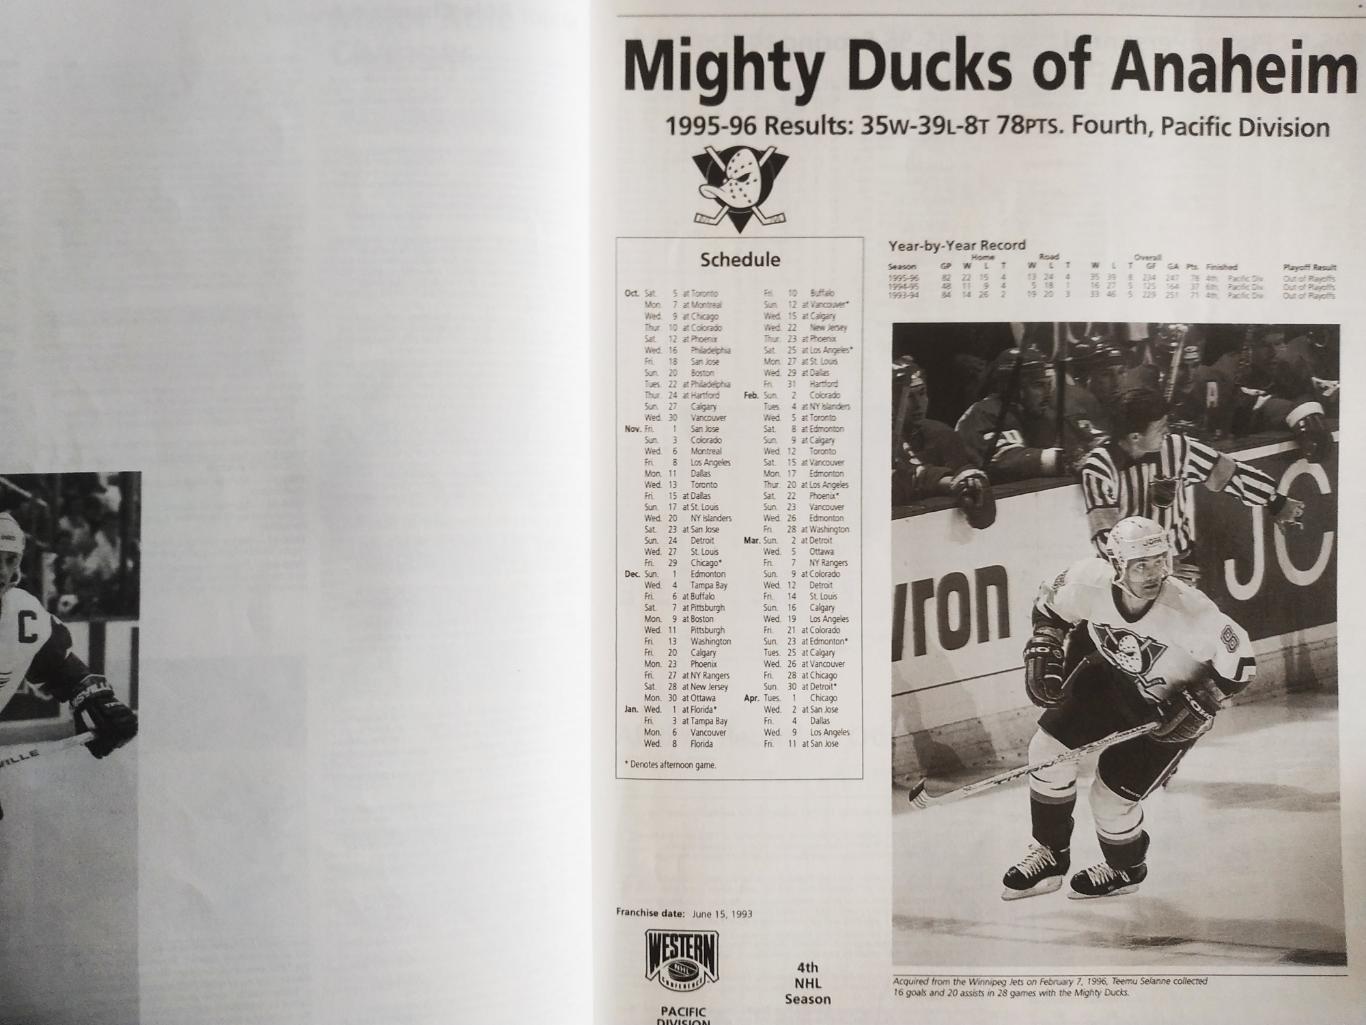 ХОККЕЙ ОФИЦИАЛЬНЫЙ СПРАВОЧНИК НХЛ 1996-97 NHL OFFICIAL GUIDE AND RECORD BOOK 2